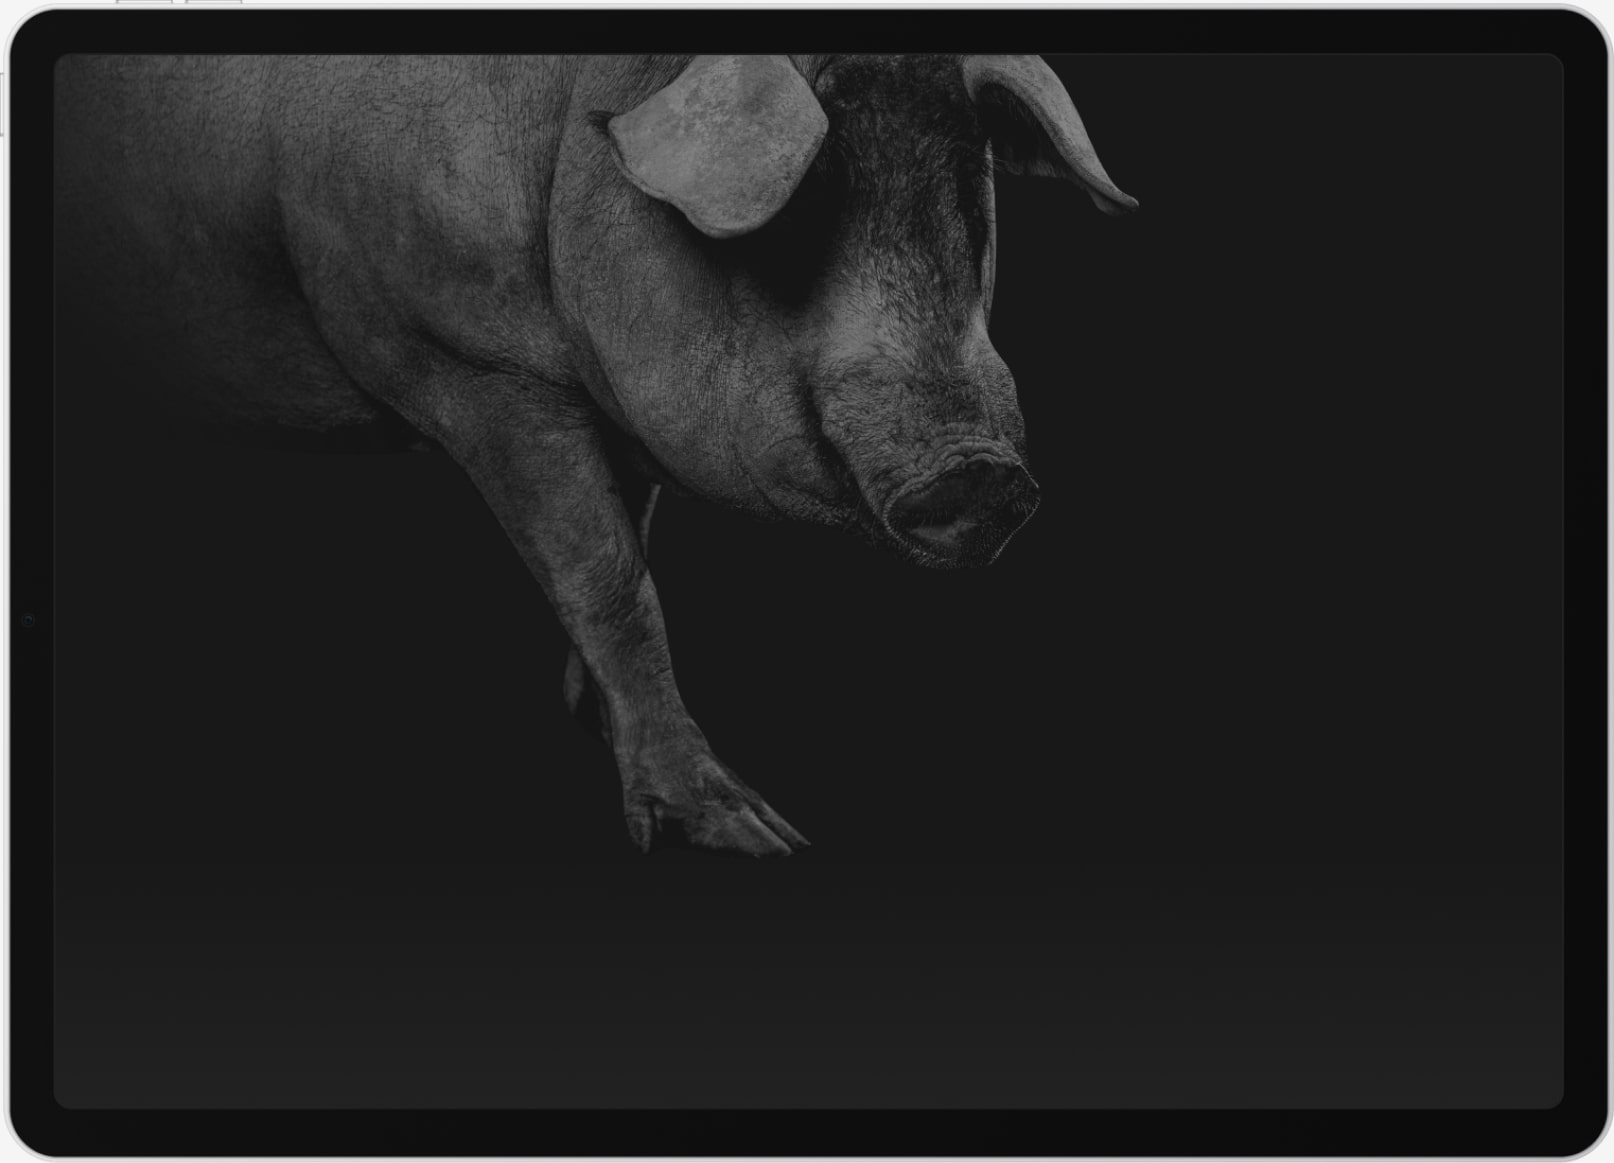 Jamones Blazquez Website Intro Pig Min